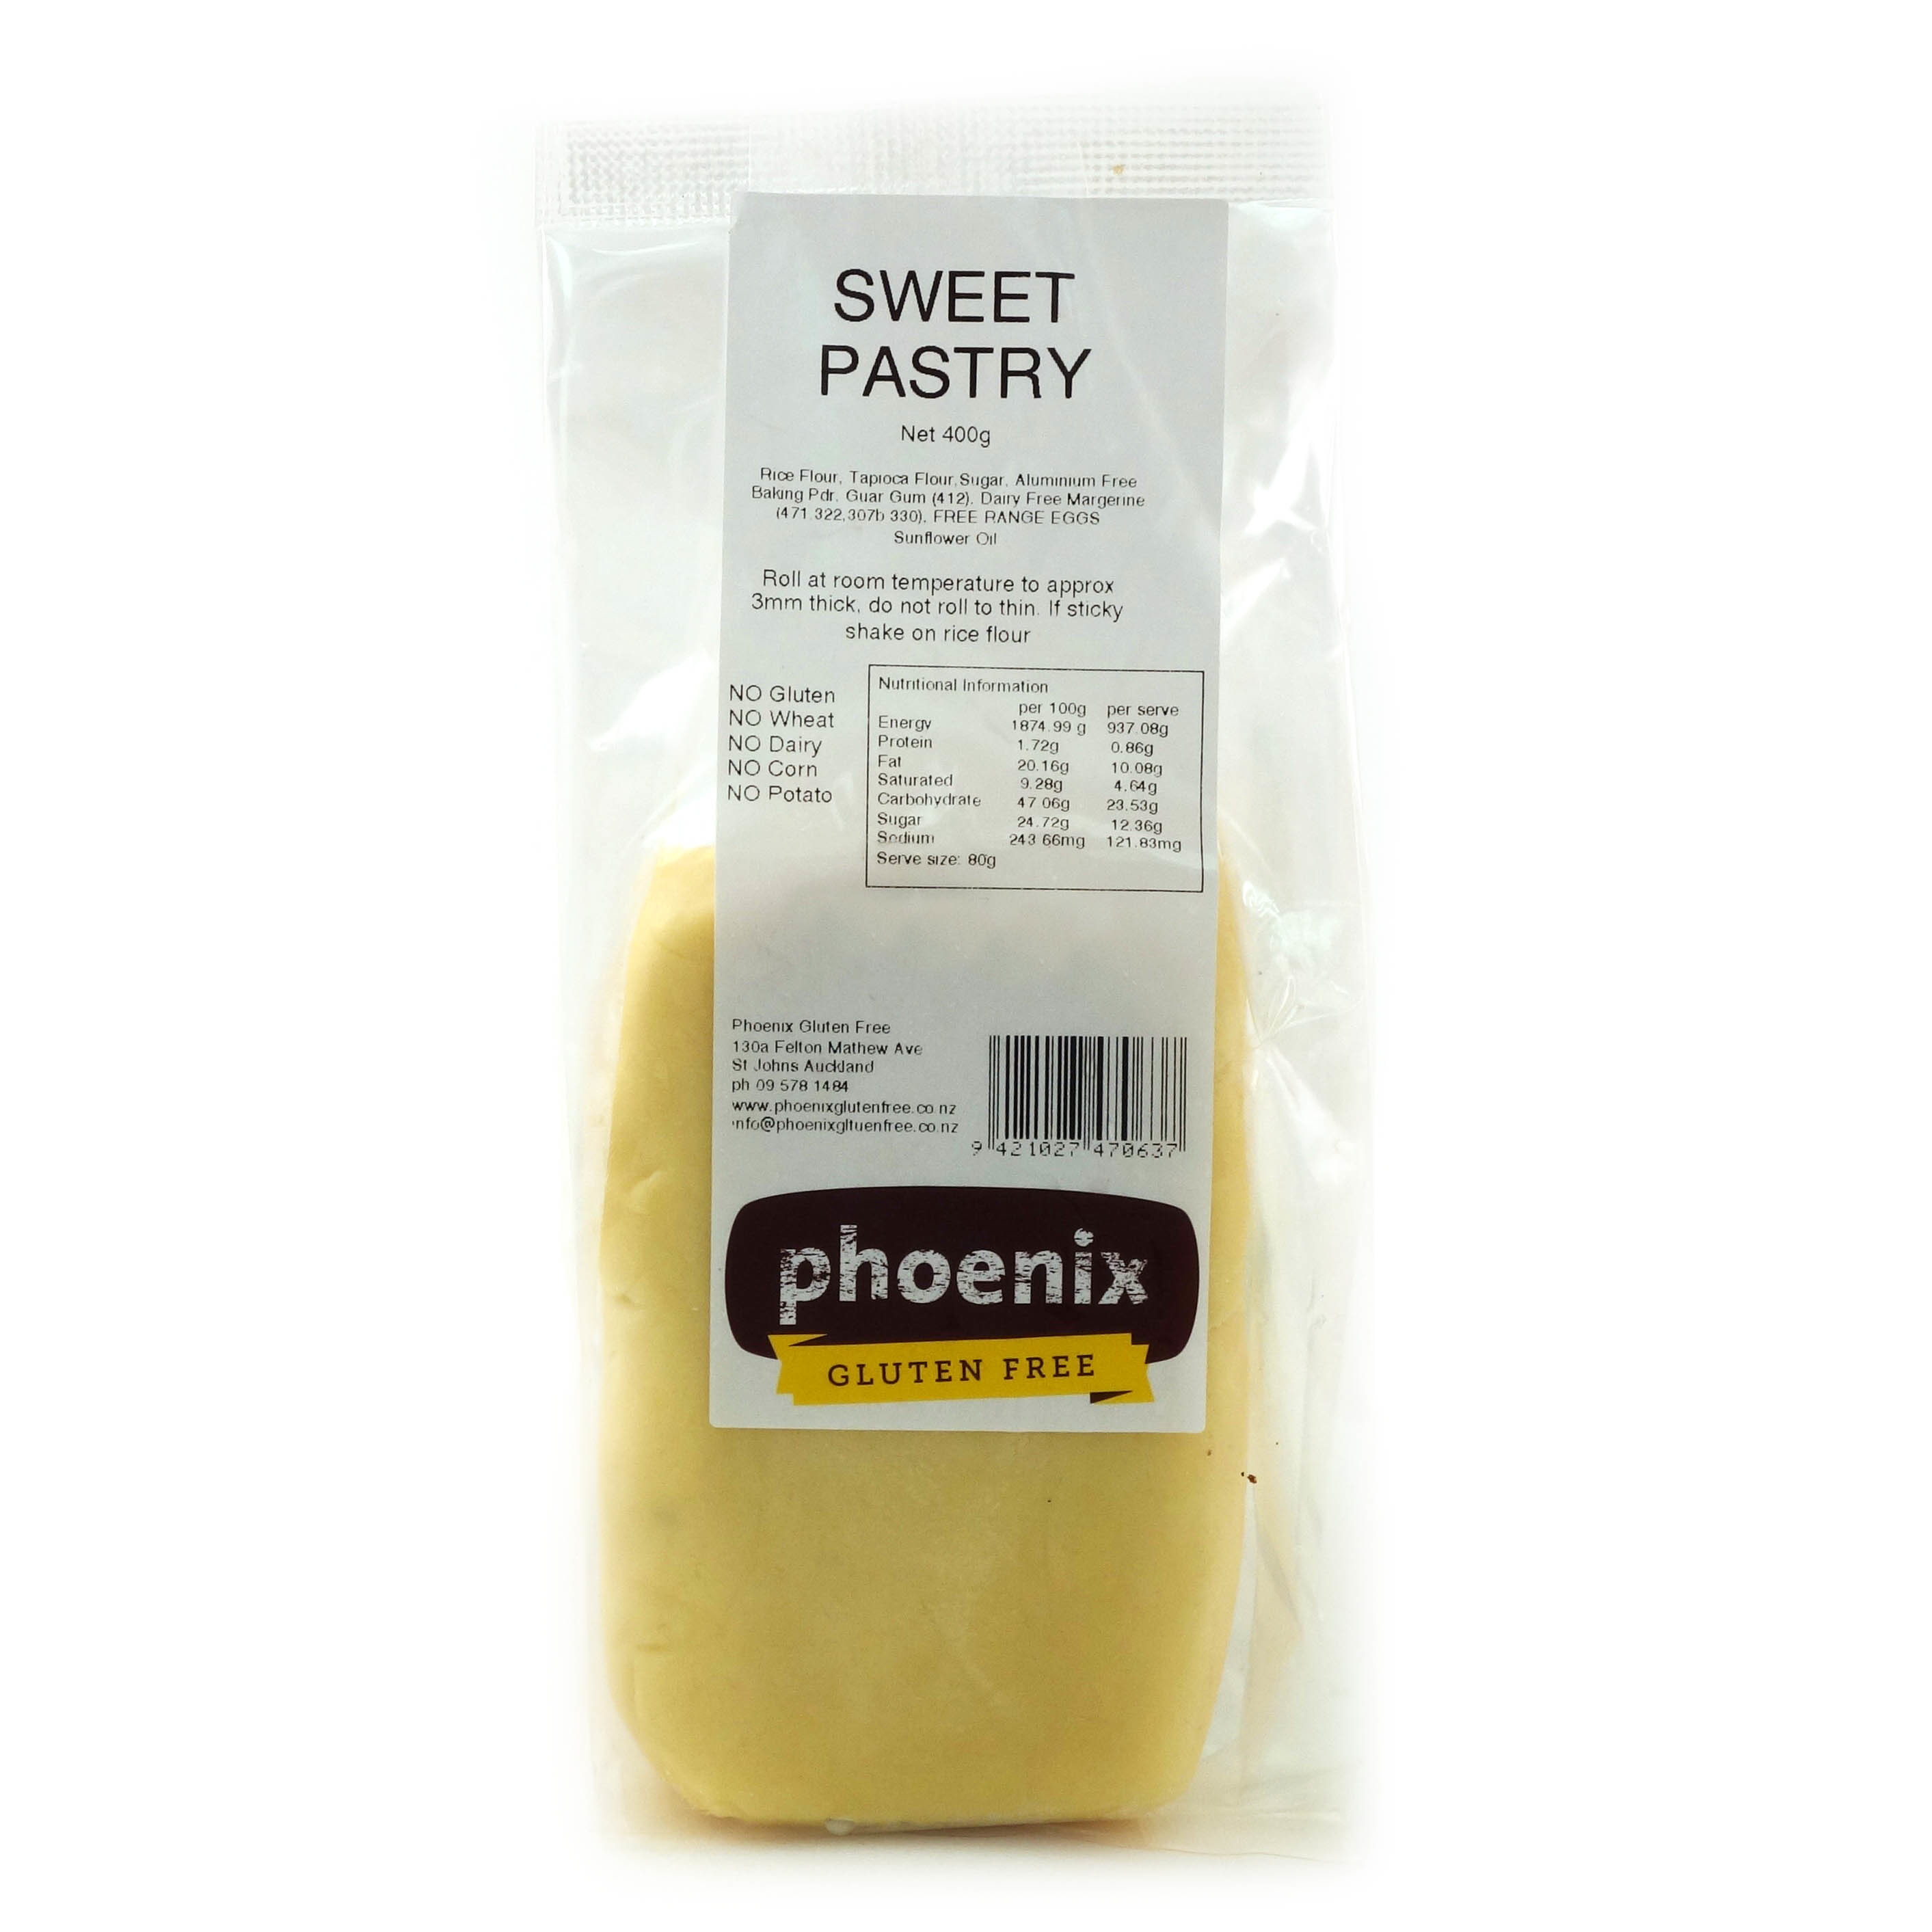 Frozen Phoenix GF Pastry Sweet 400g - NZ*